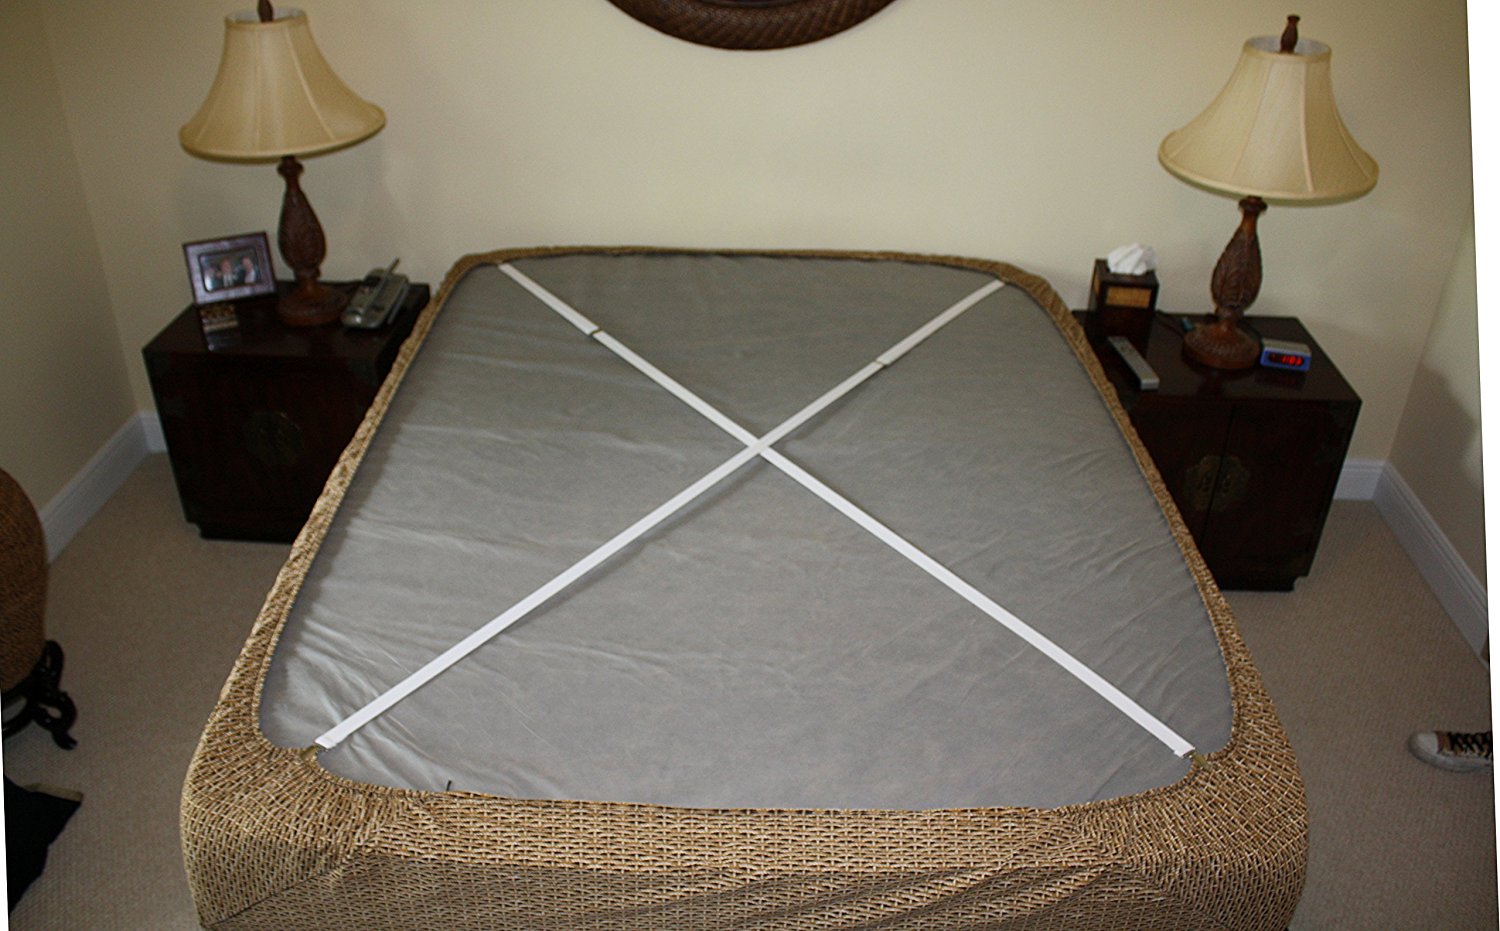 keep mattress from sliding on box spring